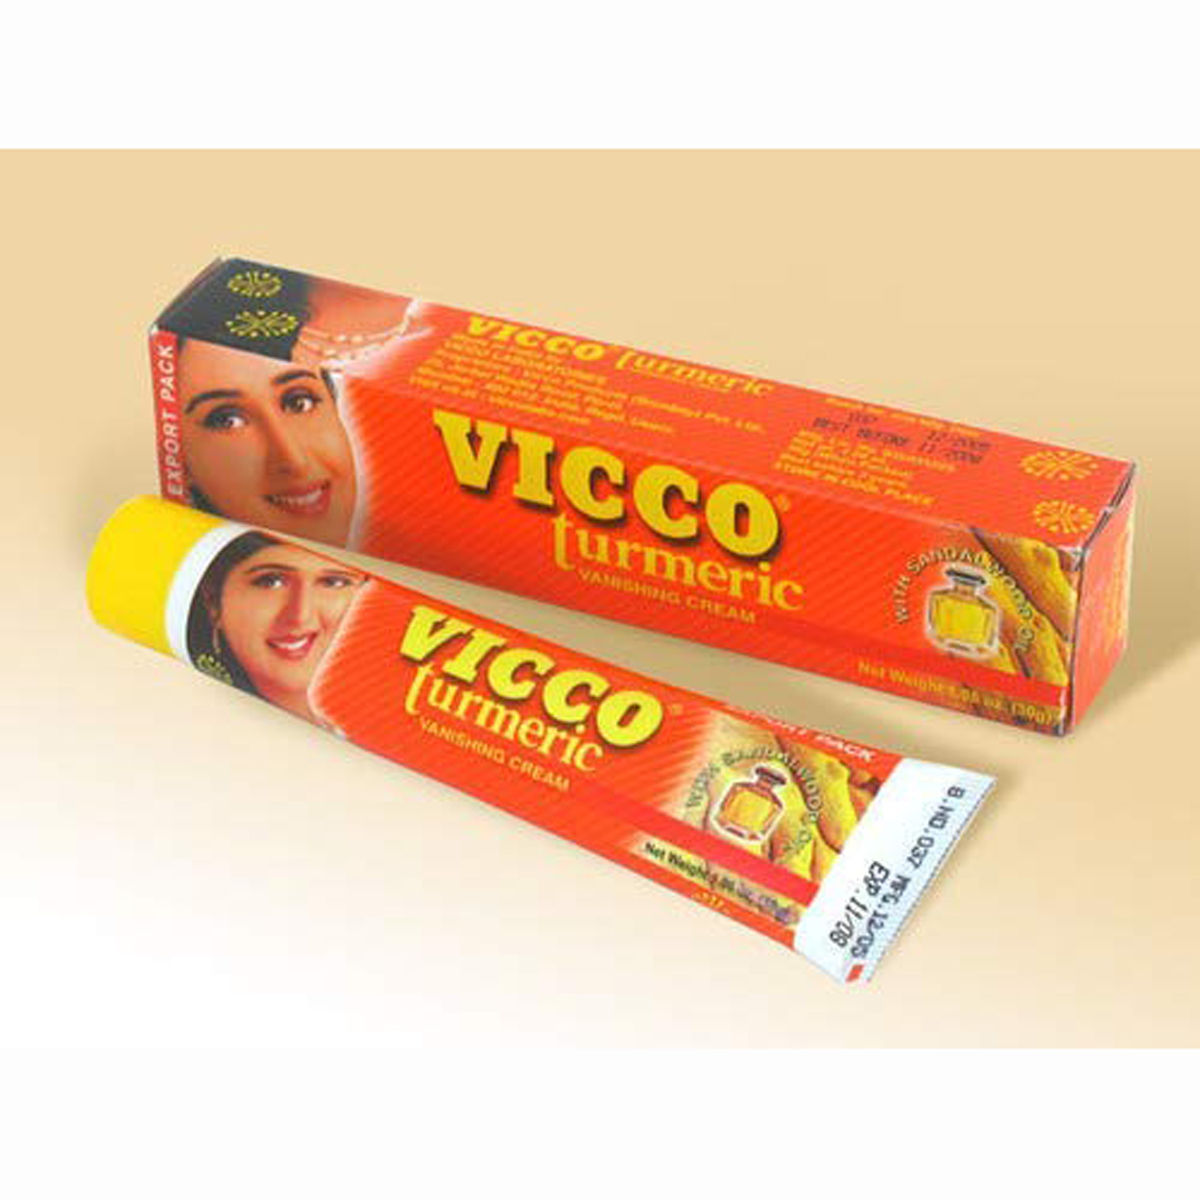 Vicco Turmeric Skin Cream, 15 gm, Pack of 1 